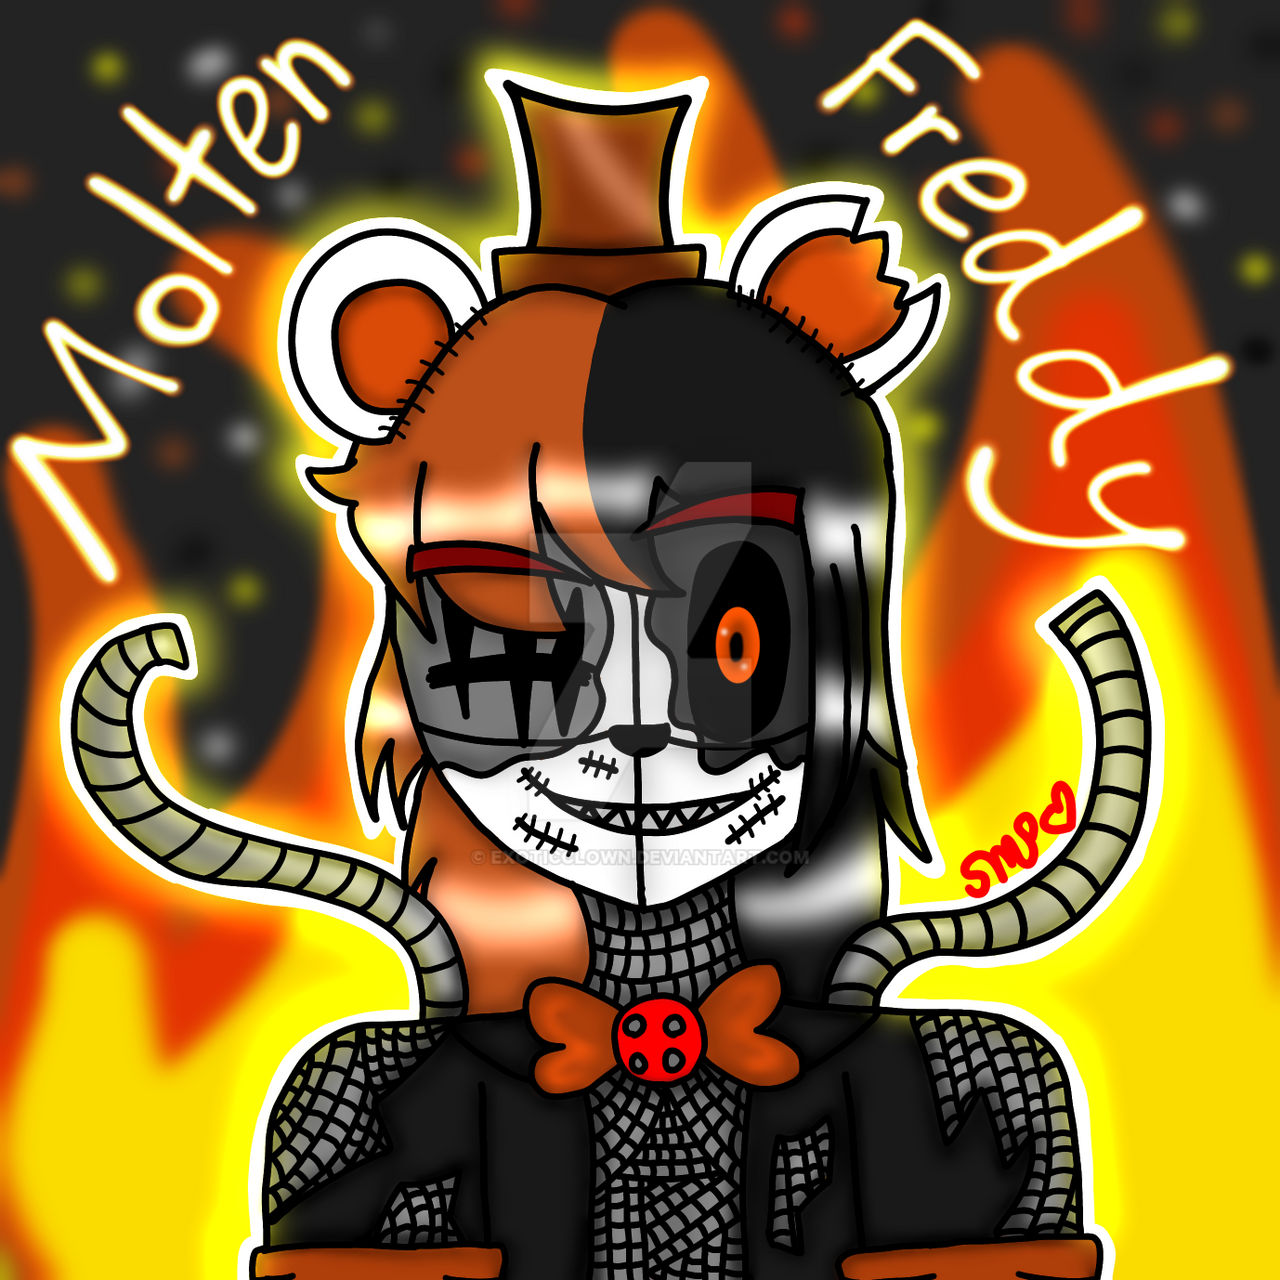 Talk to molten Freddy - Test